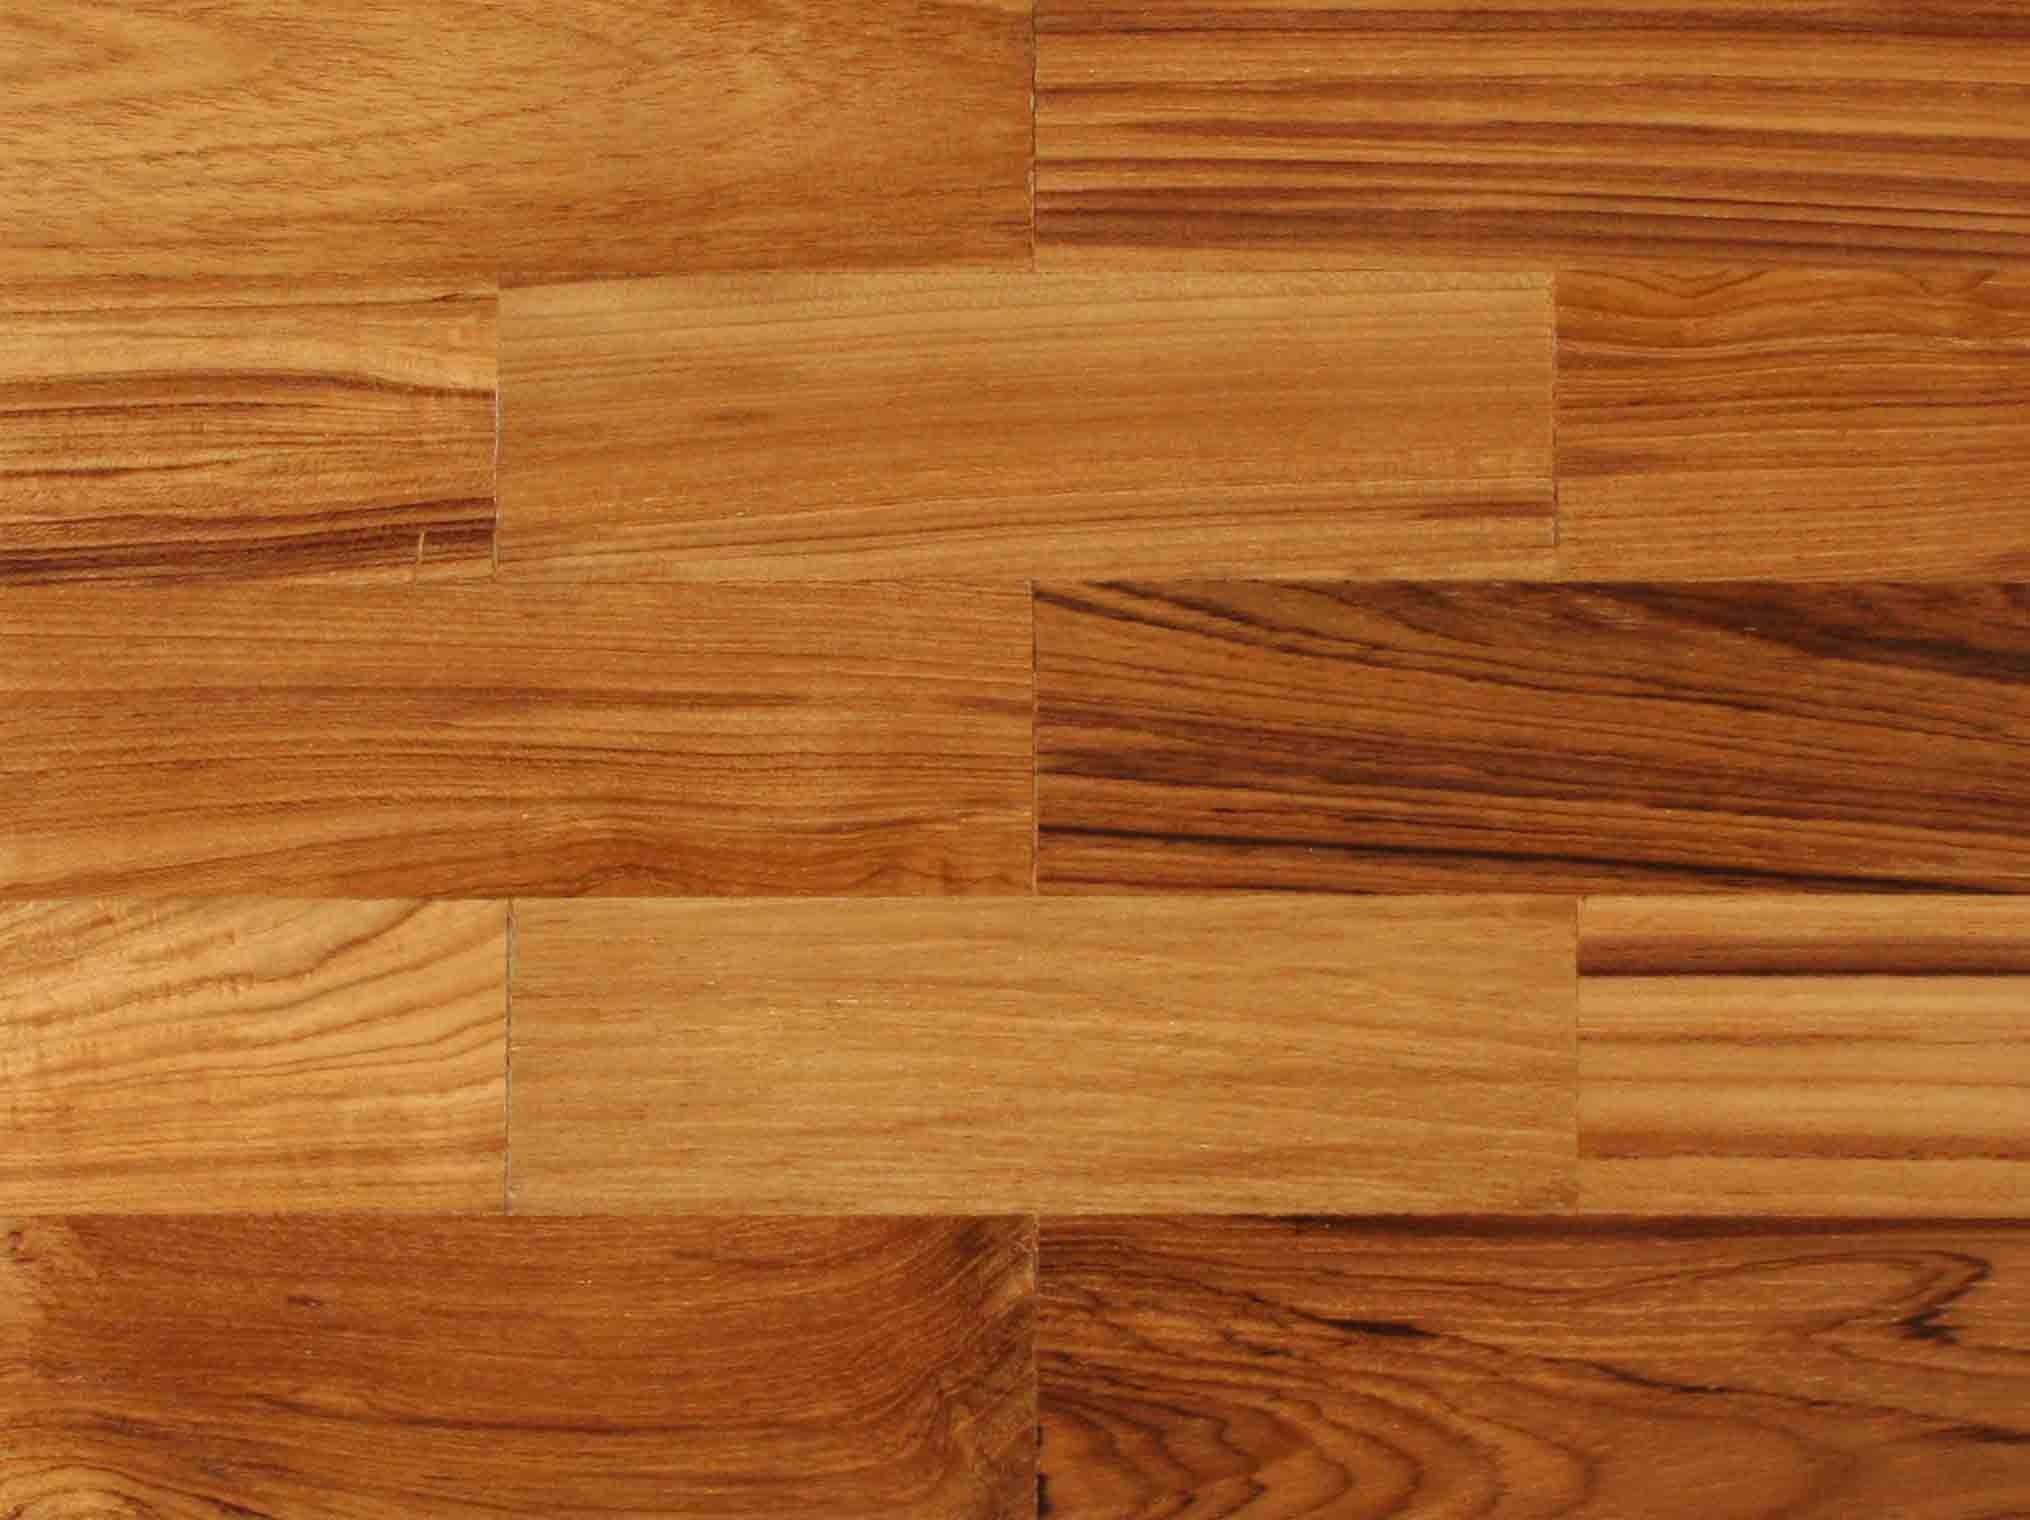 2030x1520 ... Wood Floor And The Wooden Floors Advantage Wood Floors ...